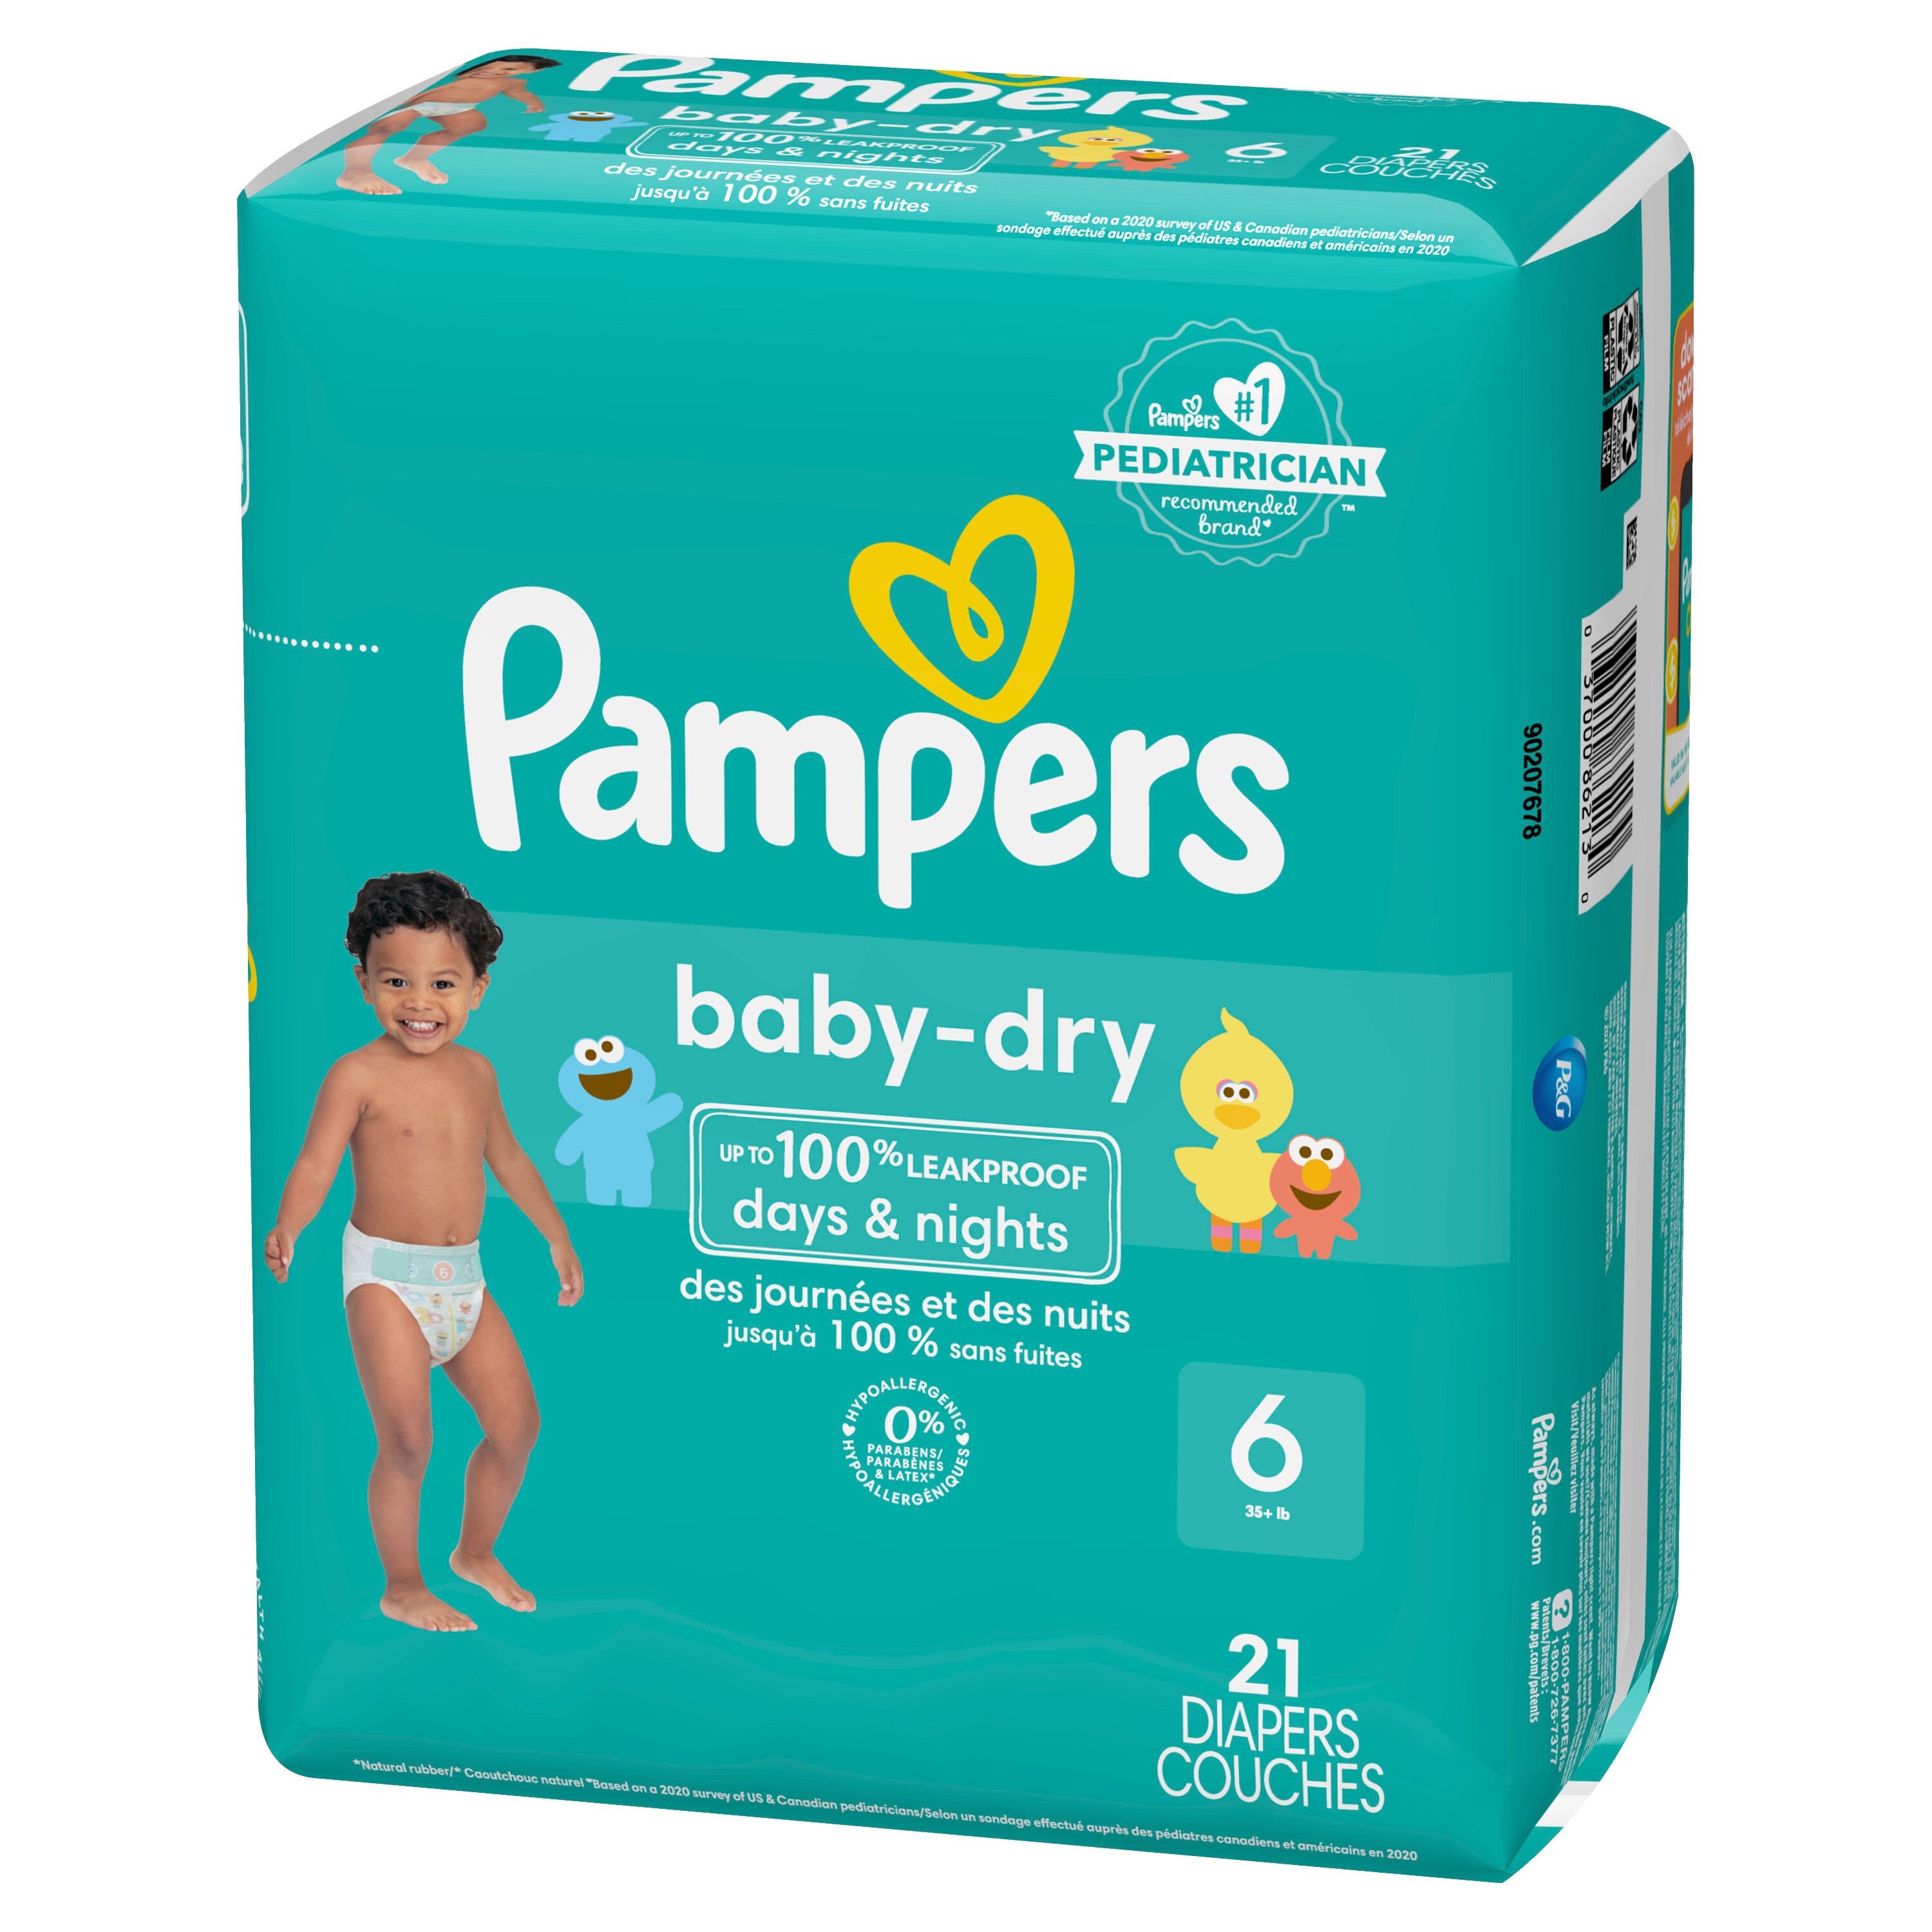 maandag Opa Huiswerk maken Pampers Baby Dry Pack Diapers | Pick Up In Store TODAY at CVS